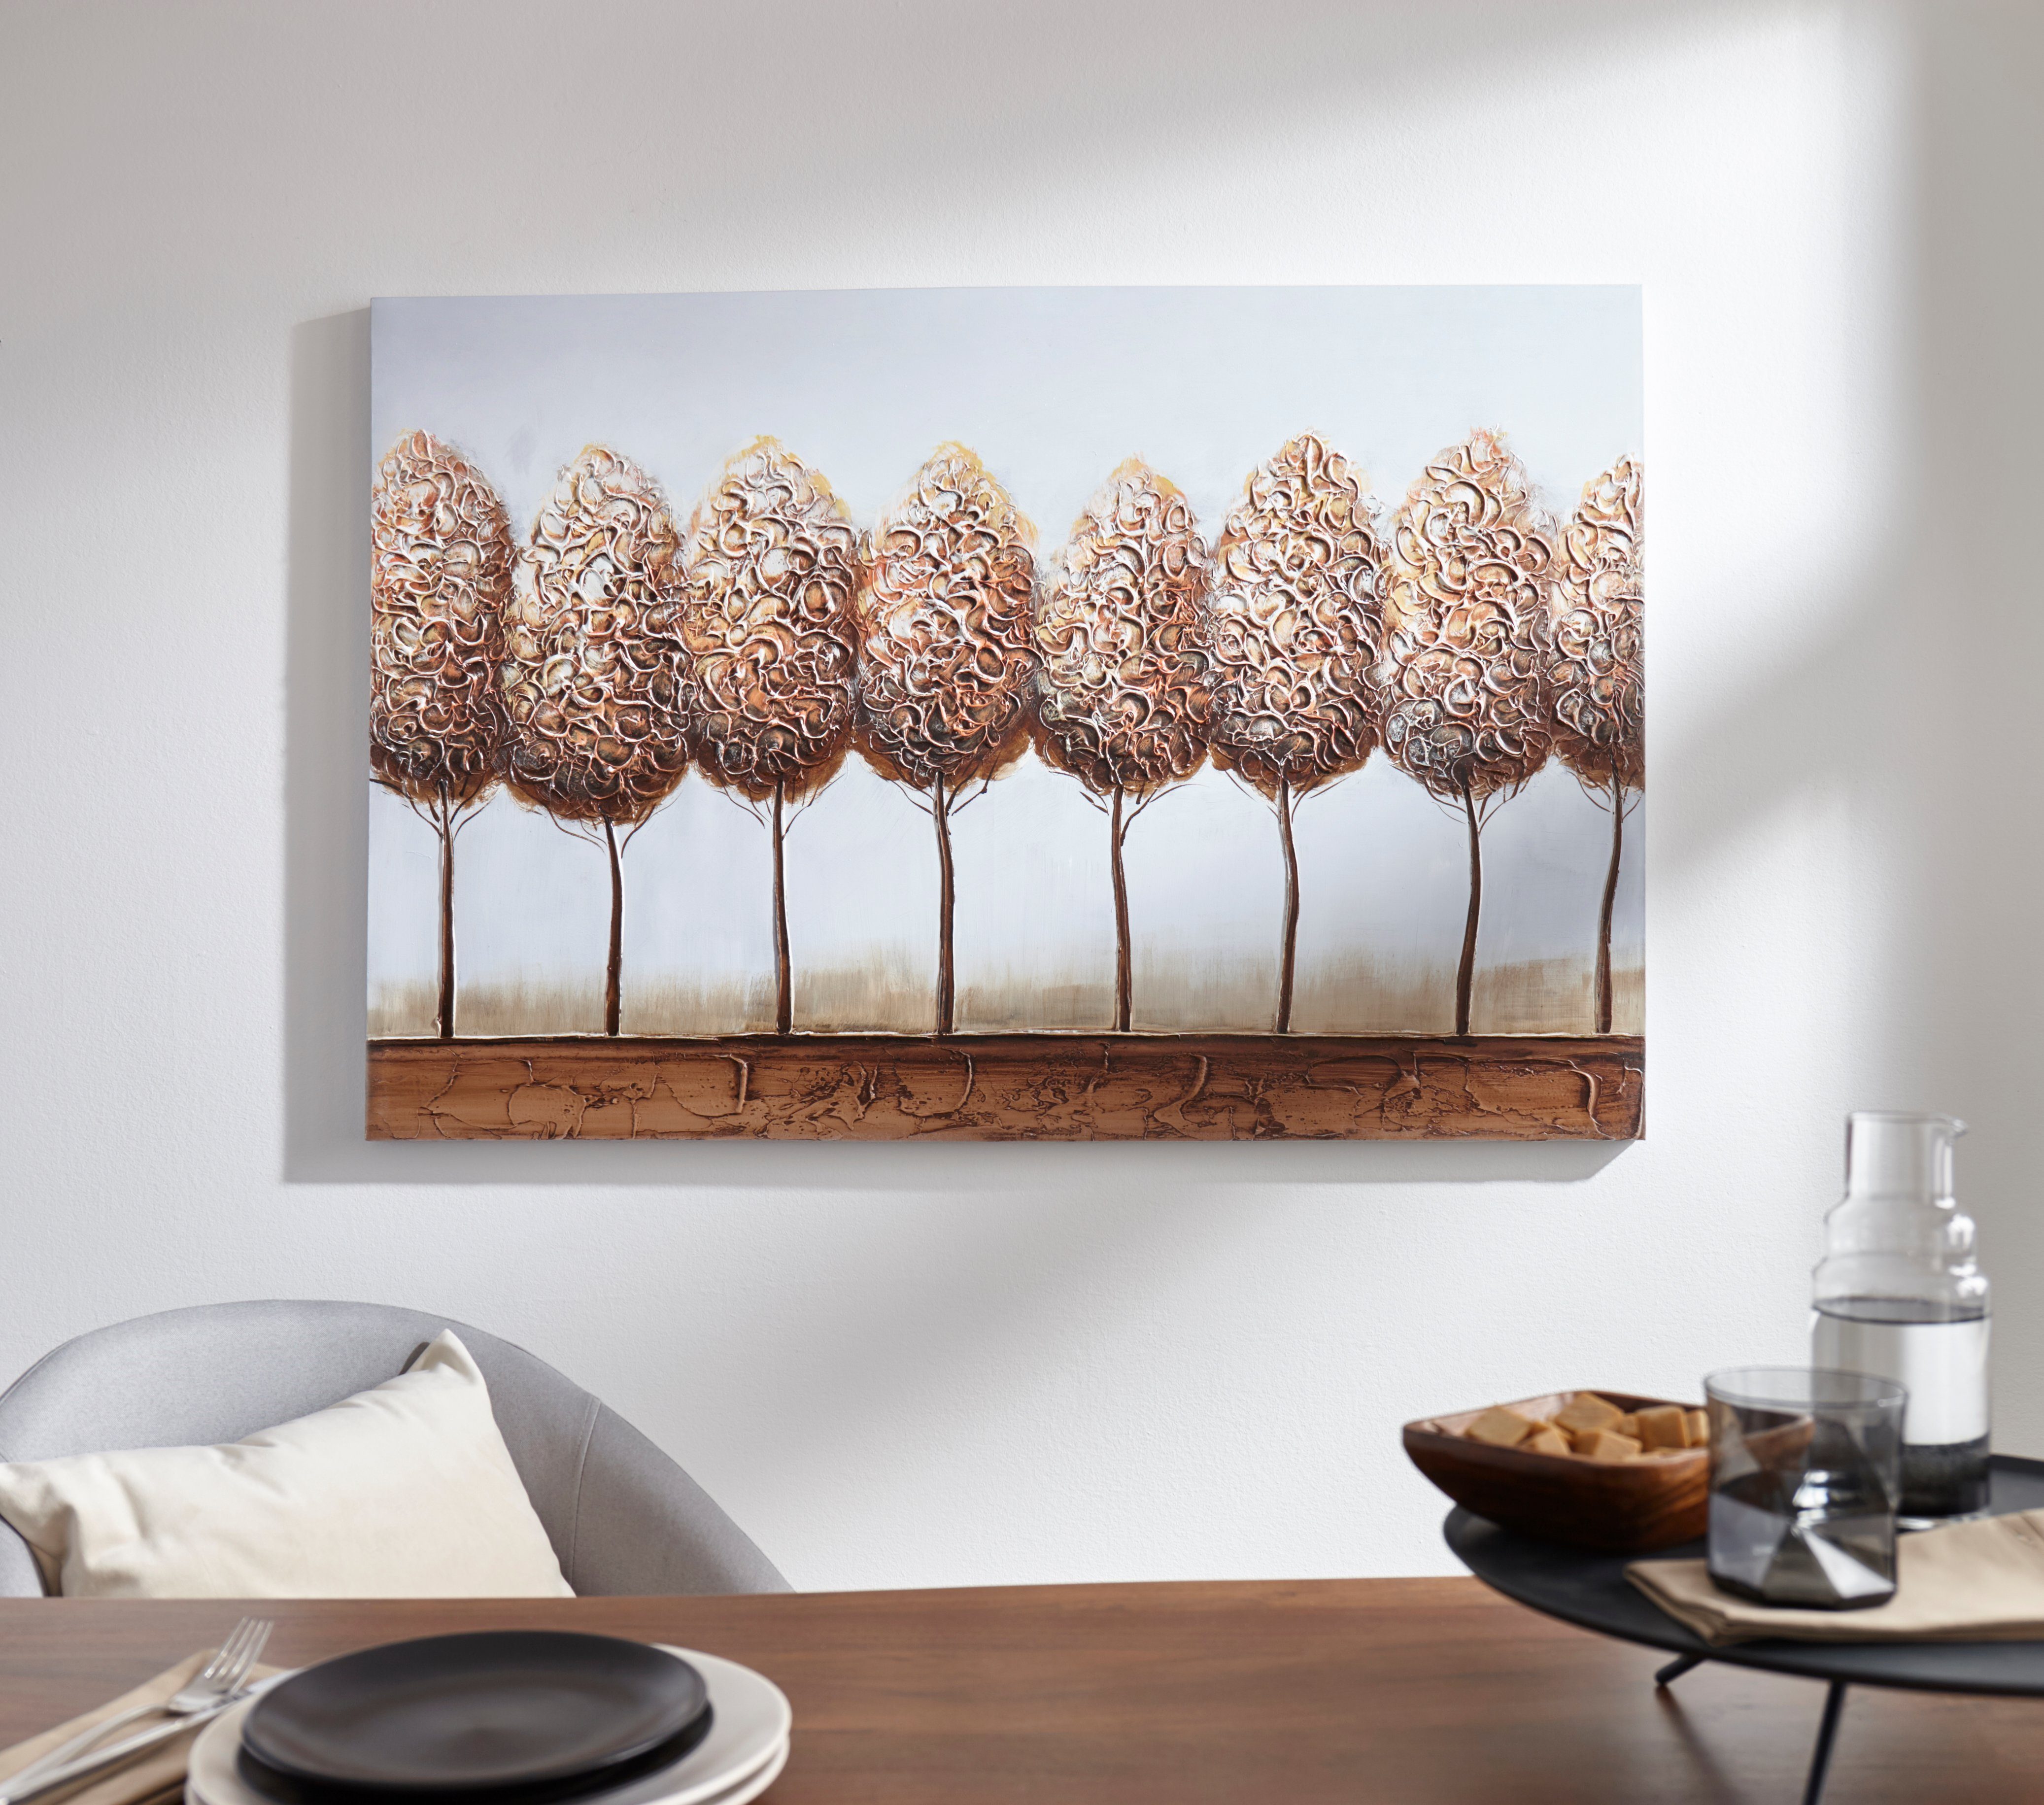 Home affaire Leinwandbild Bäume, Motiv Trees, 120x80 Wohnzimmer cm